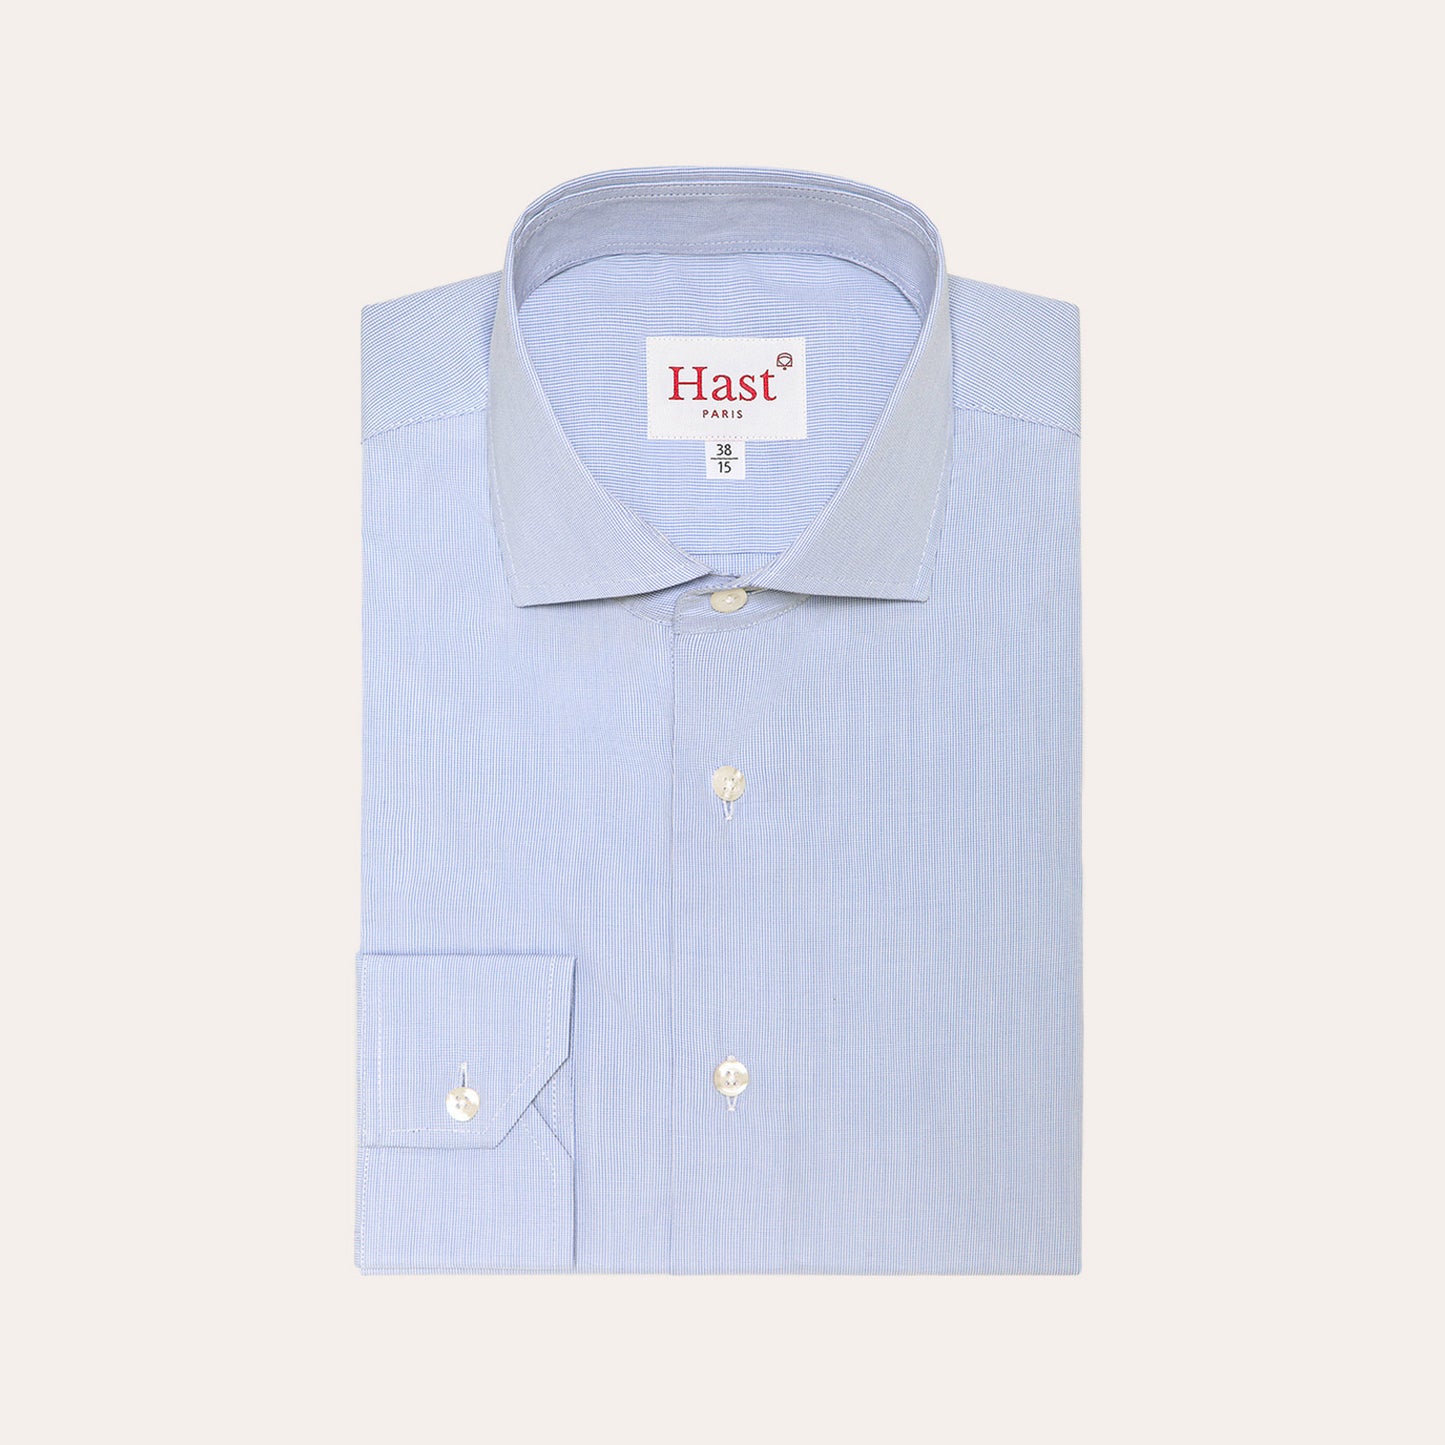 Faux-plain double-twisted poplin shirt with blue checks